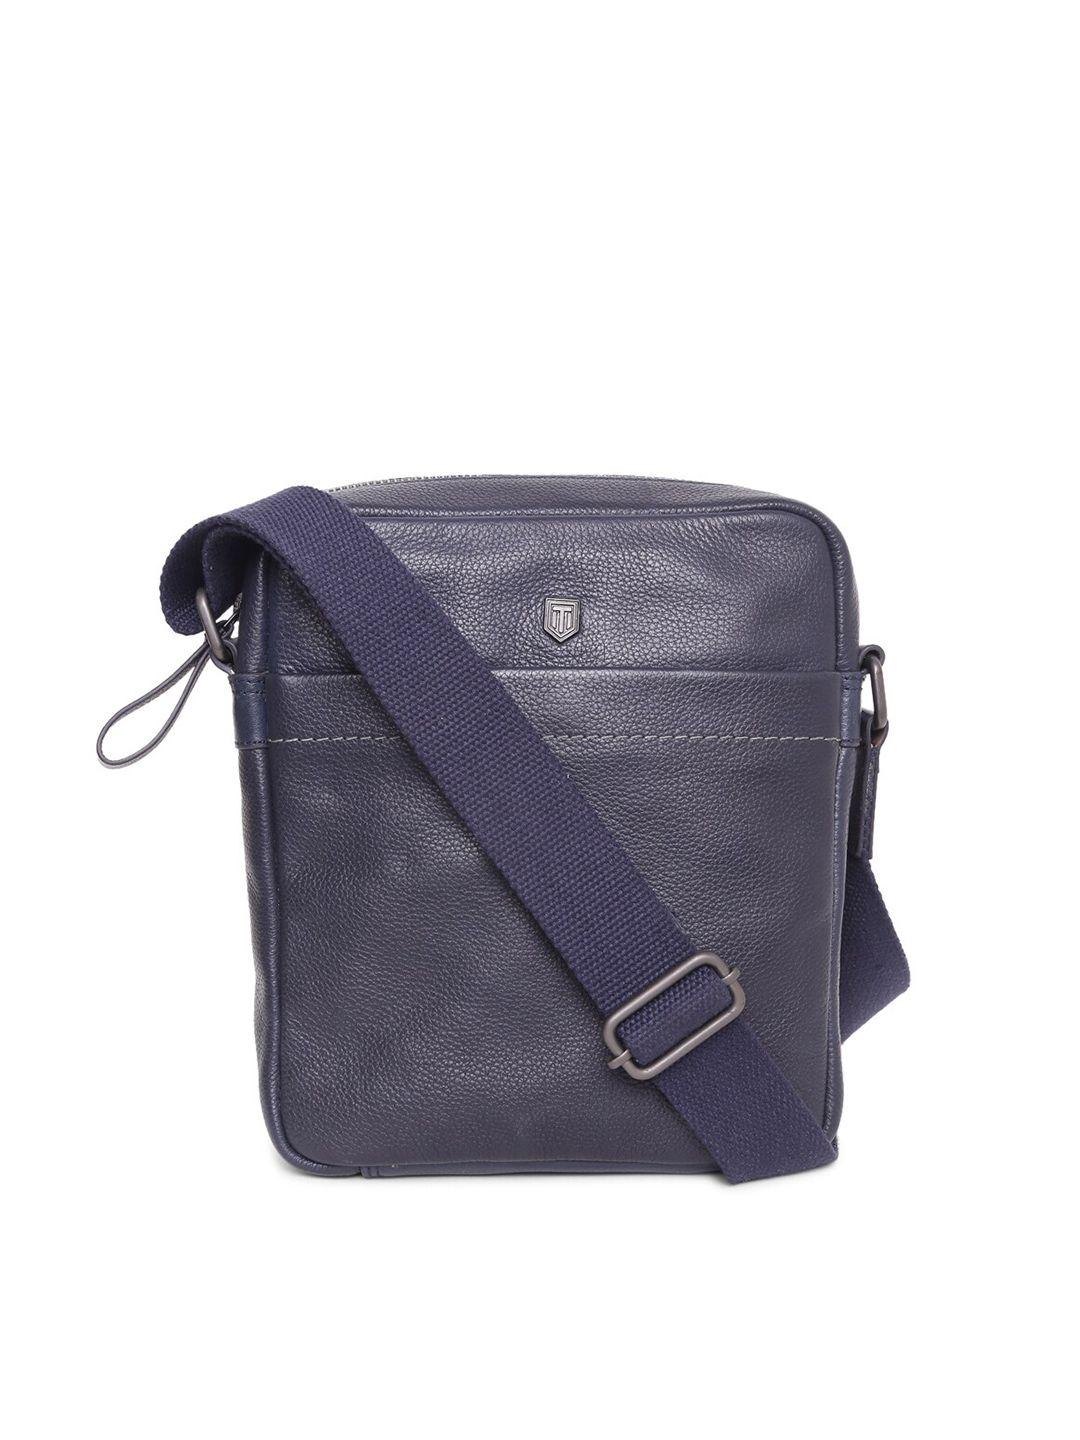 tom lang london unisex purple messenger bag